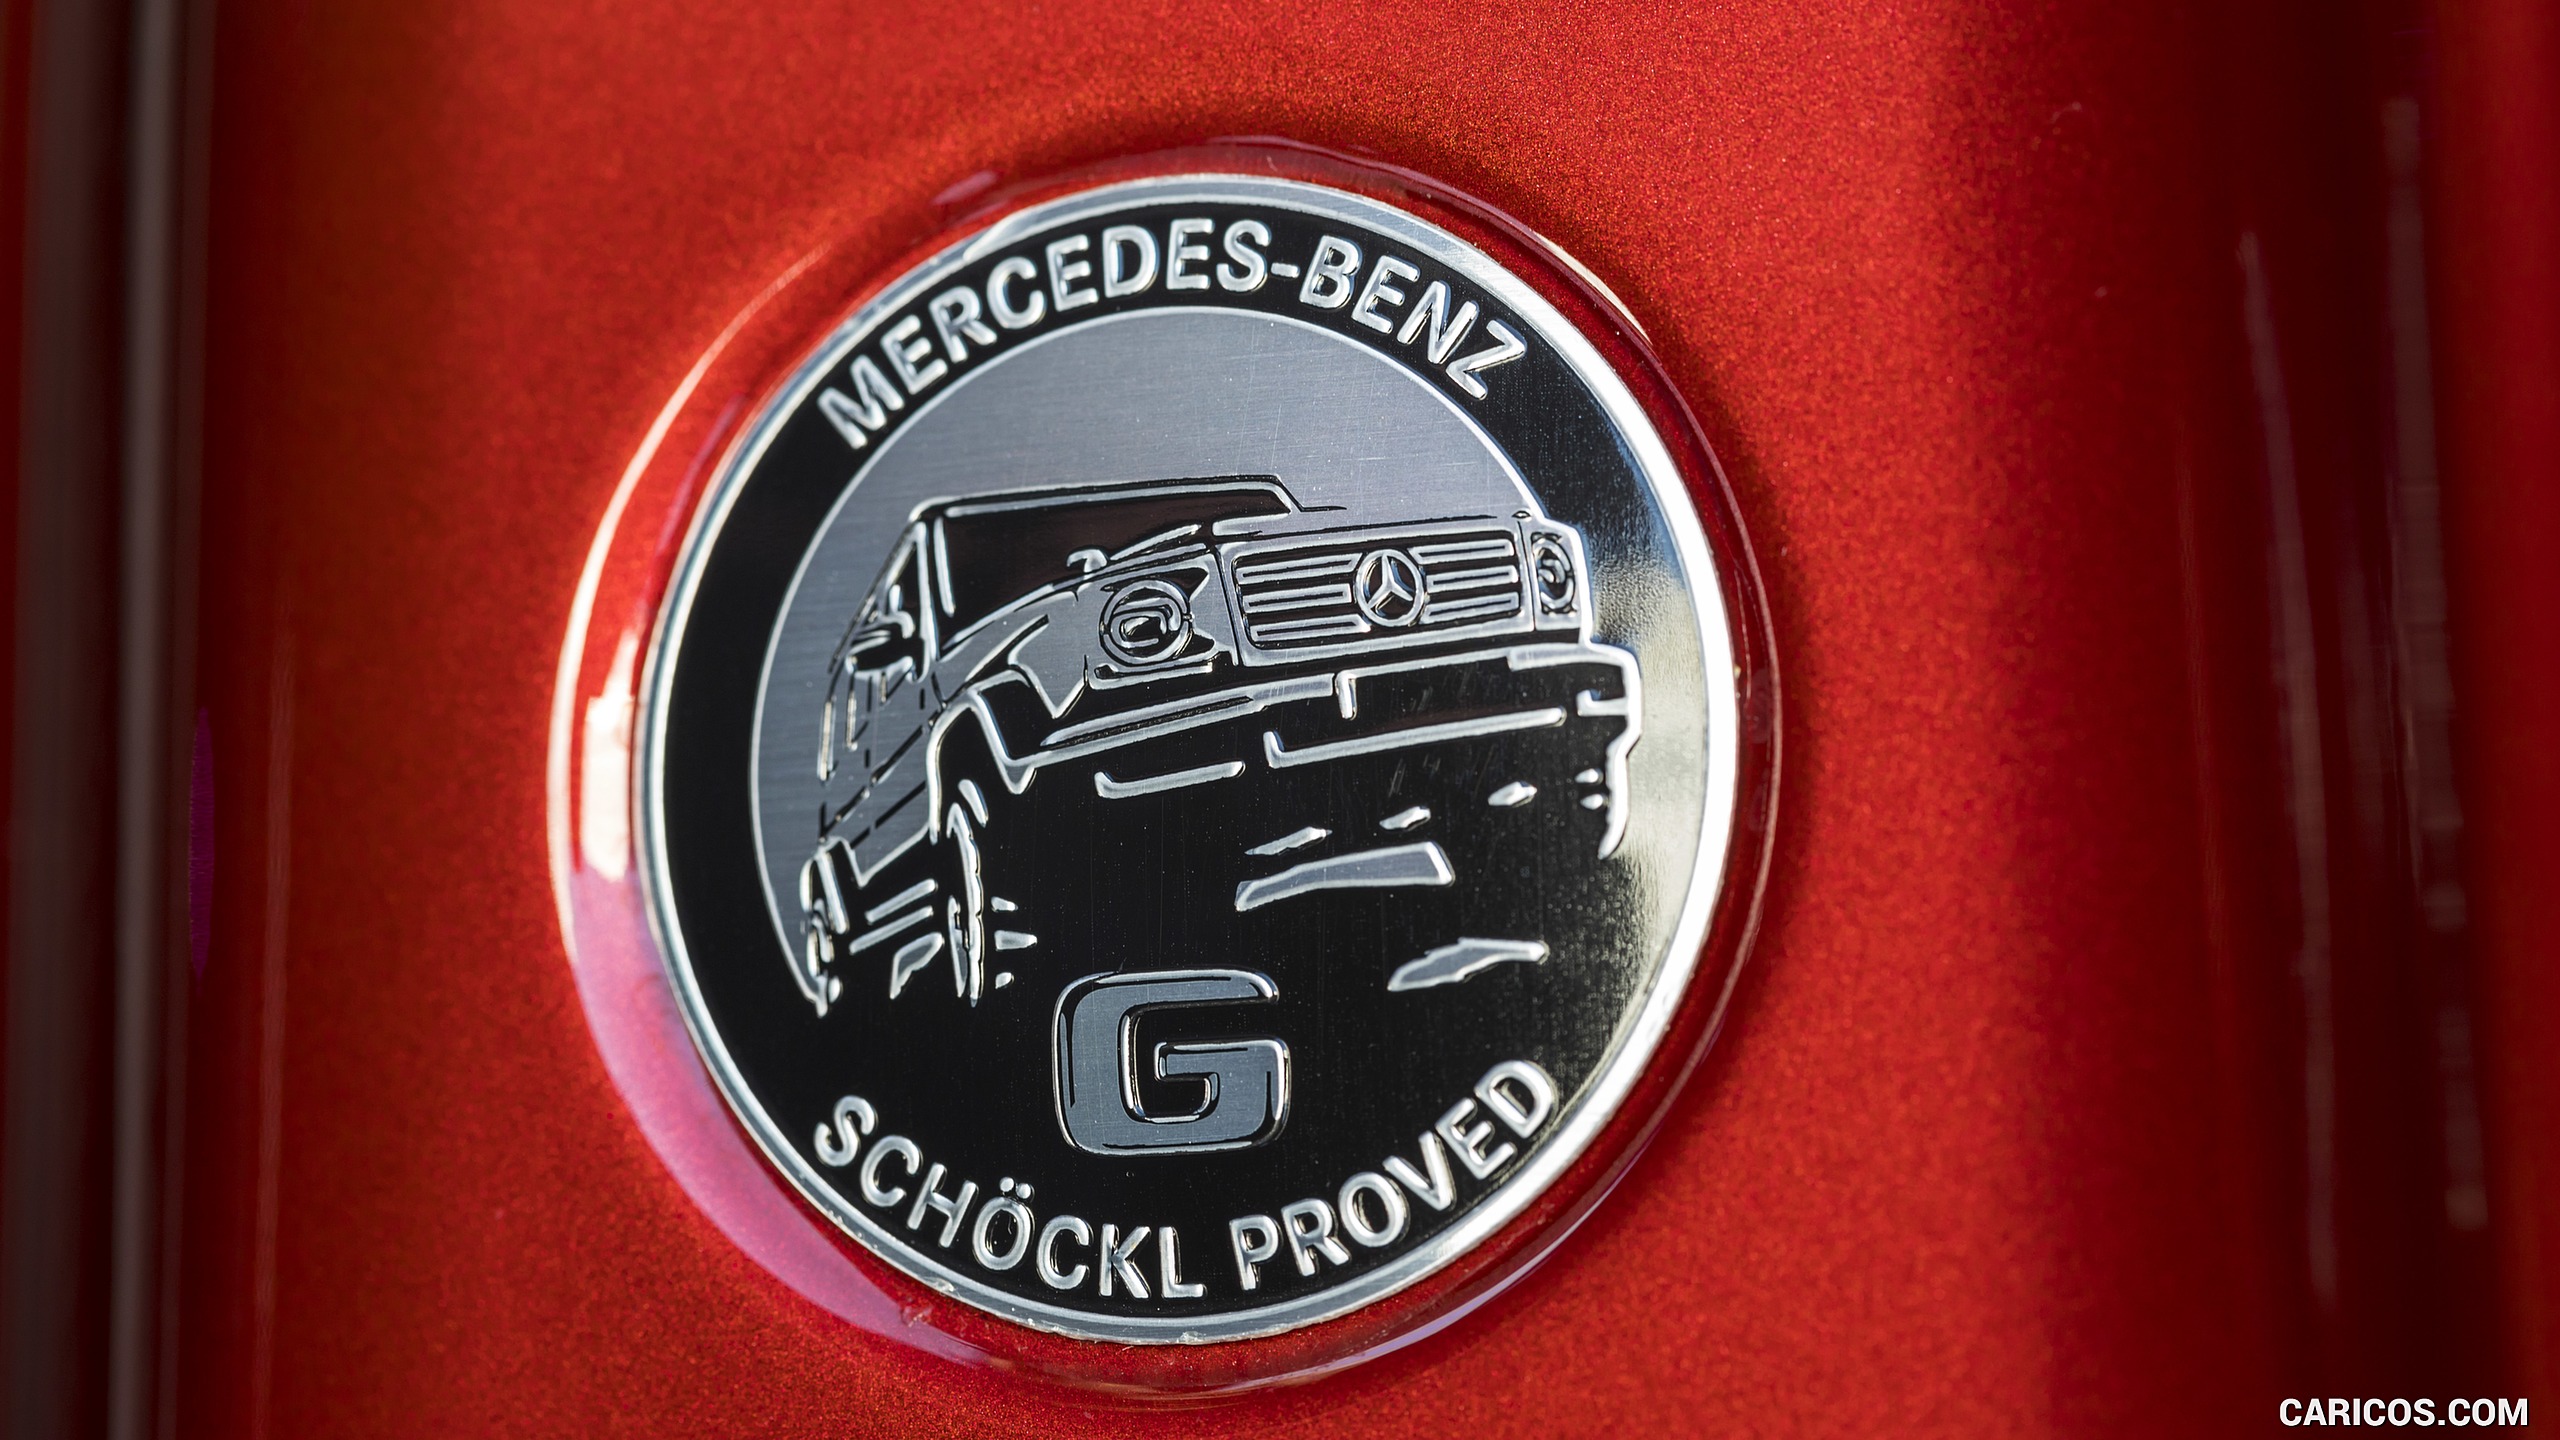 2019 Mercedes-Benz G 350 d (Designo Hyazinth Red Metallic) - Badge, #21 of 51